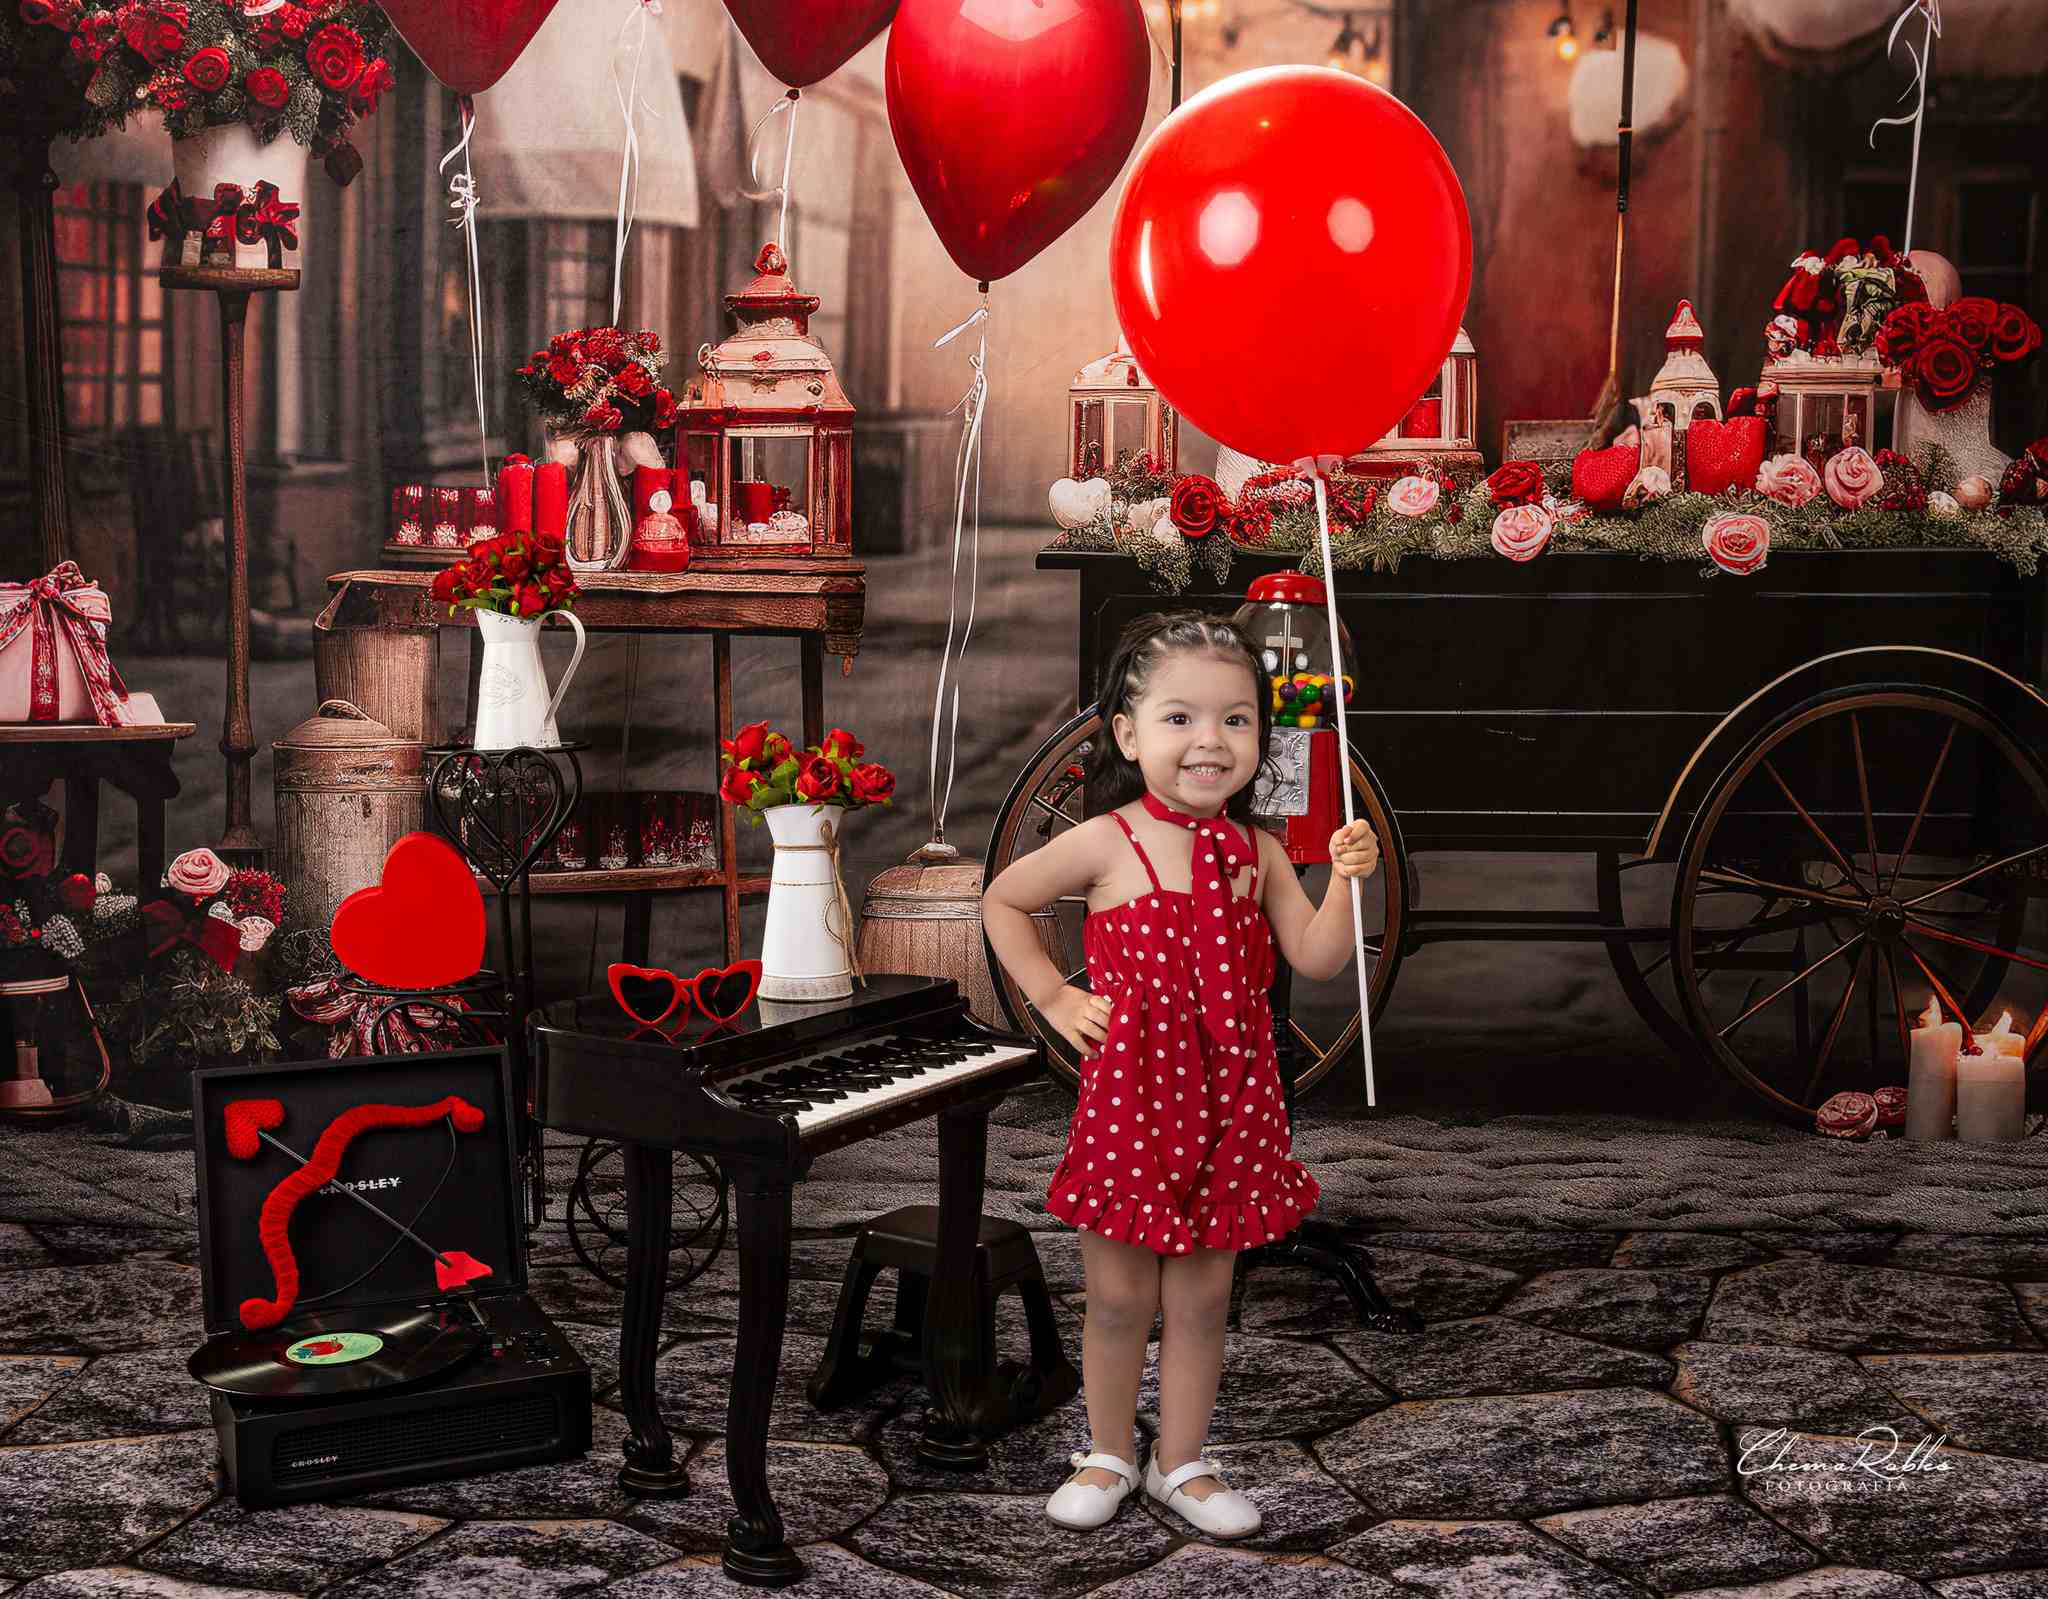 Kate Valentine's Day Retro Street Balloon Cart Backdrop Designed by Emetselch